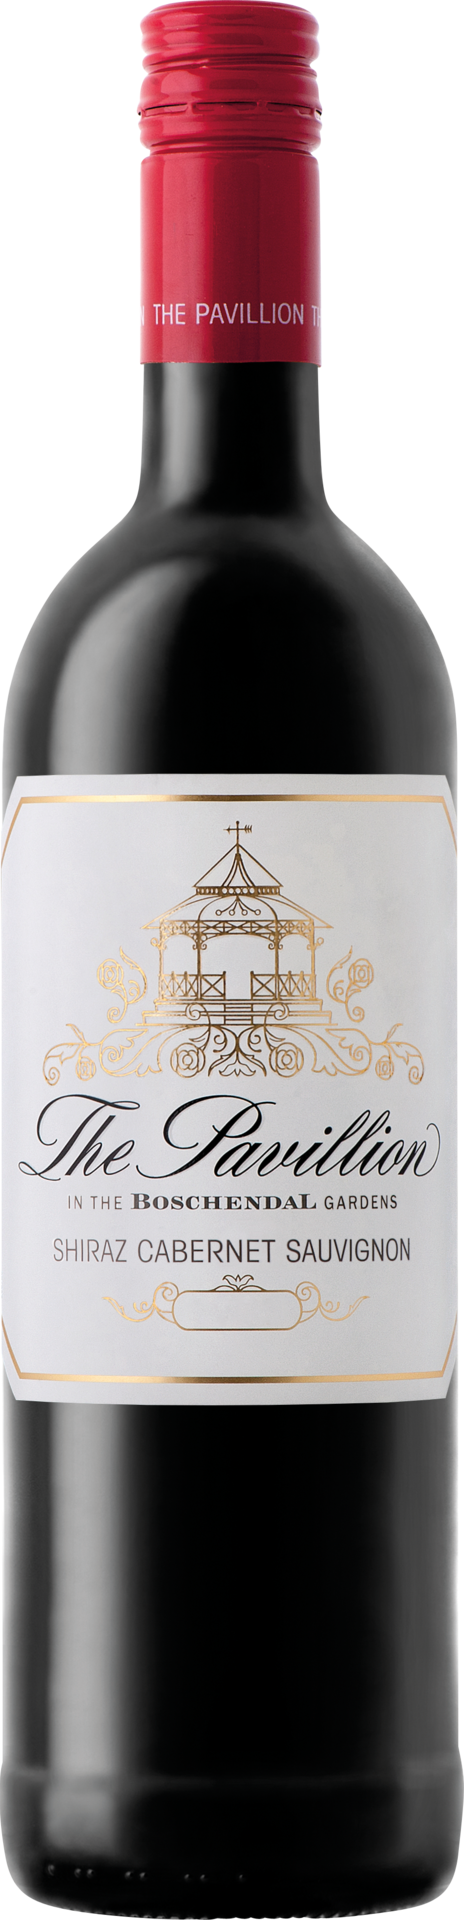 The Pavillion Shiraz - Cabernet Sauvignon